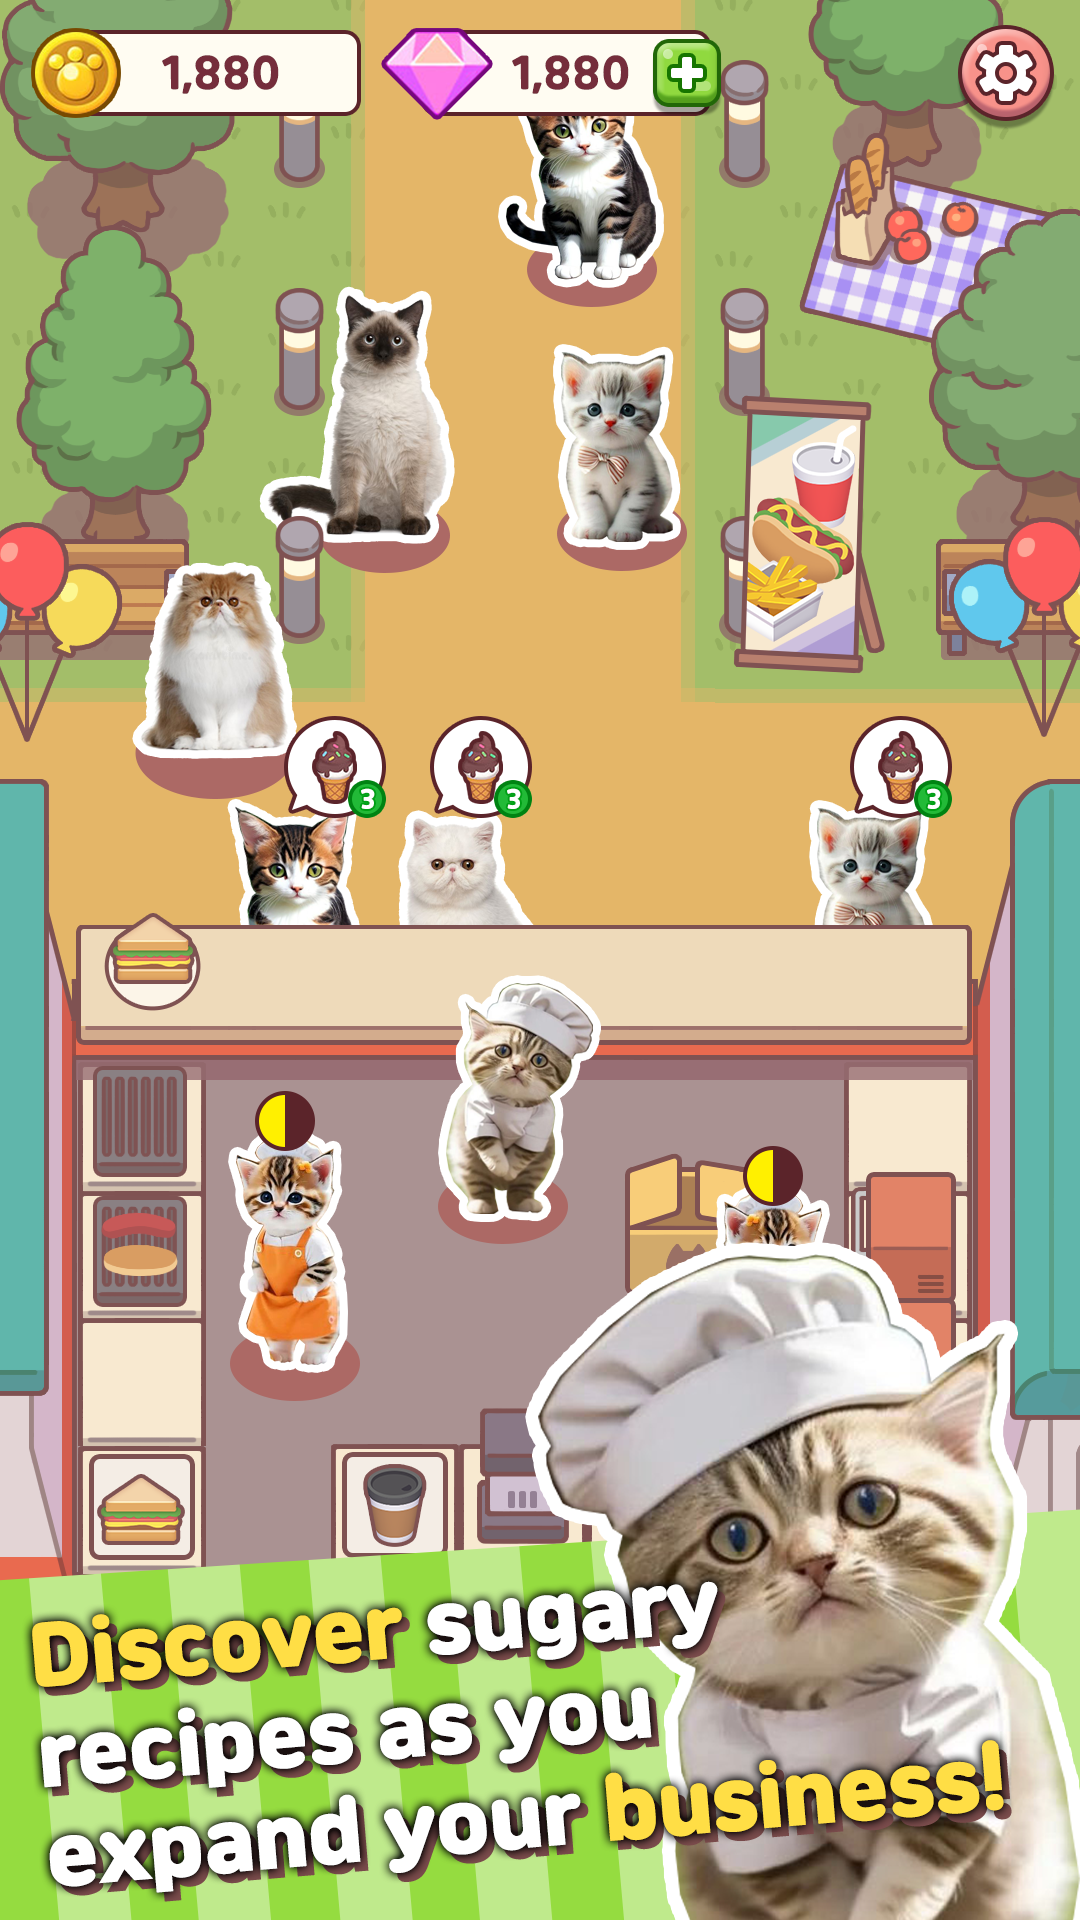 Screenshot of Cute Cat restaurant